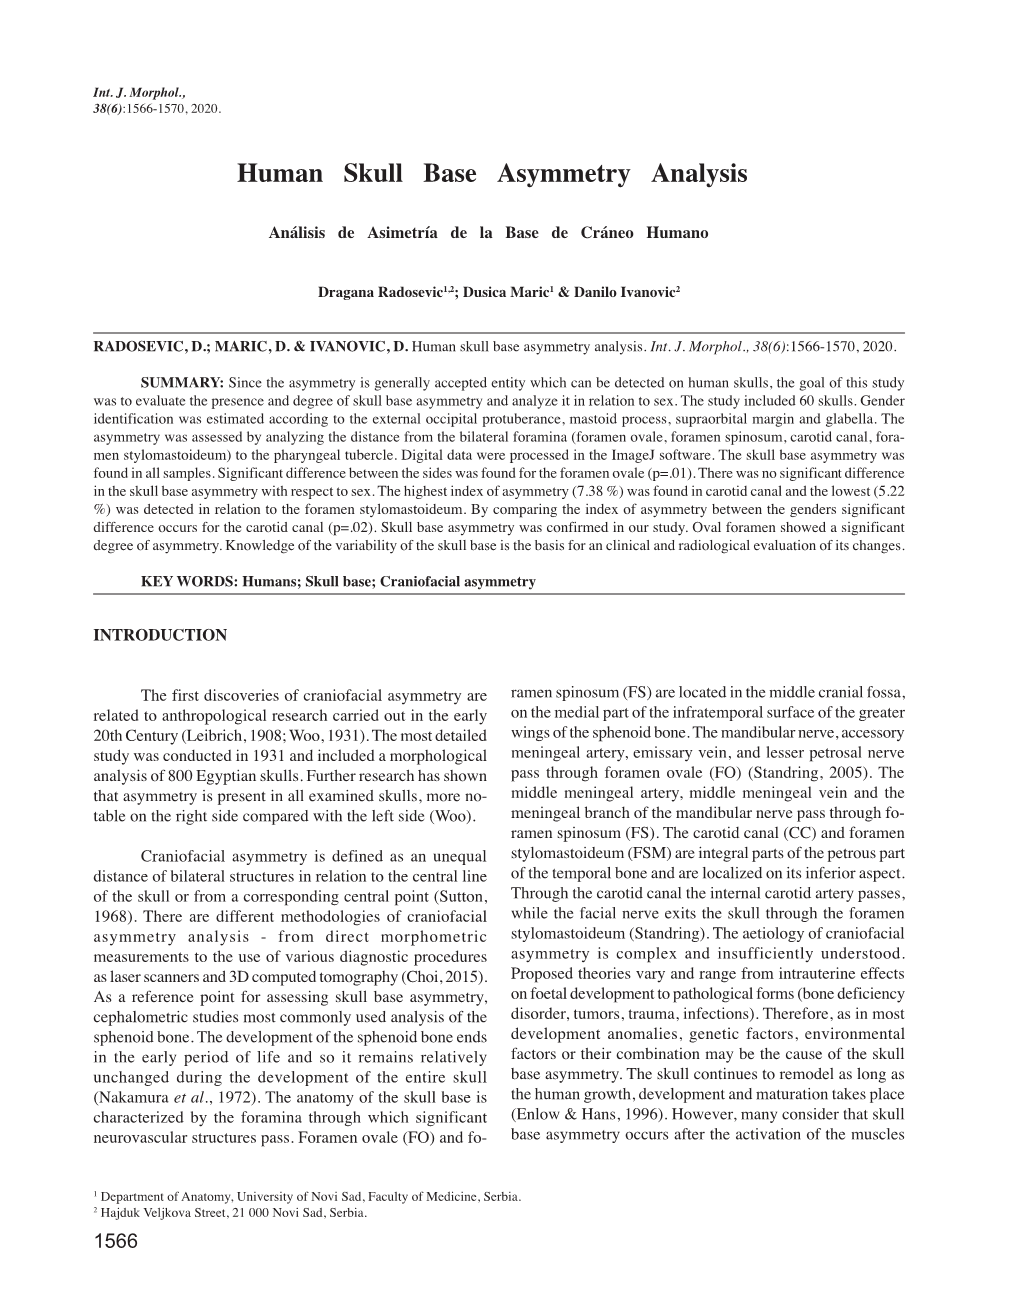 Human Skull Base Asymmetry Analysis